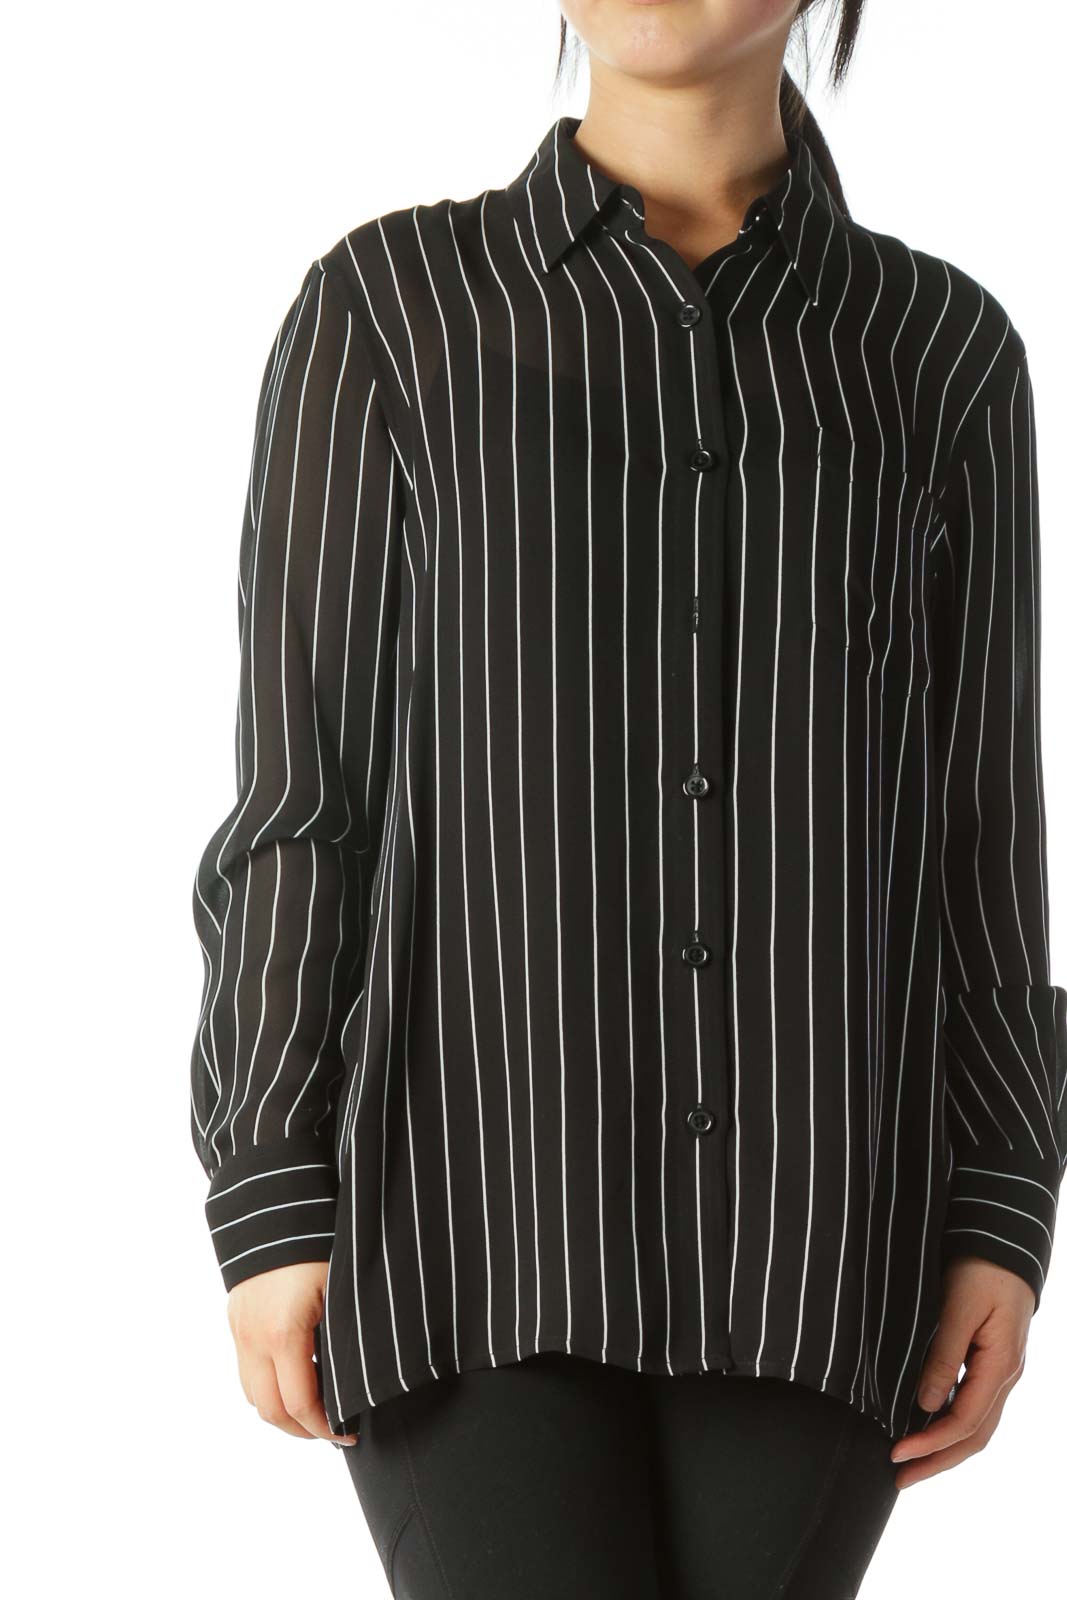 Black White Pinstripe 100% Silk Pocketed Shirt Front